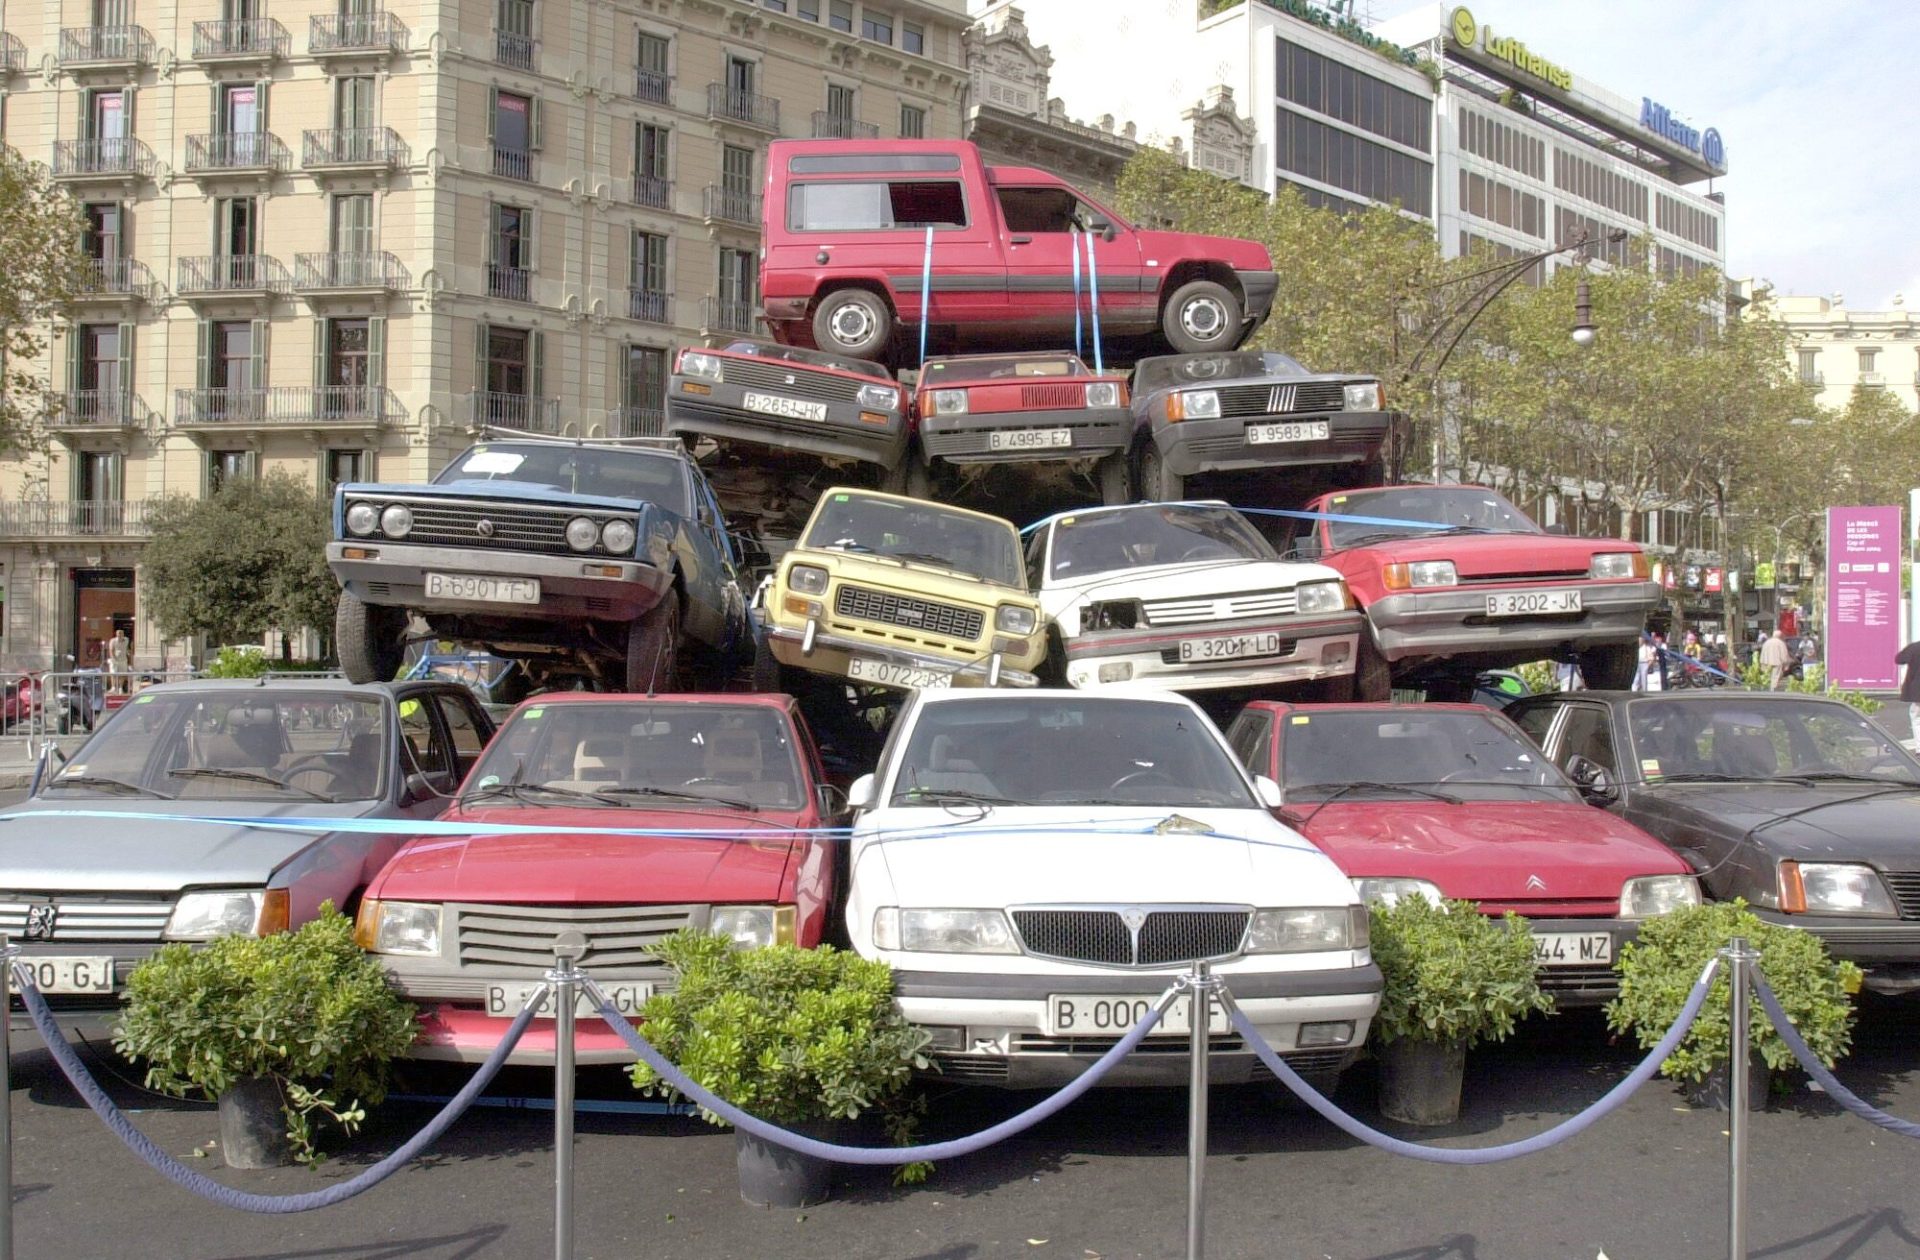 DIA EUROPEO SIN COCHES:Barcelona 22/9/01.- Escultura reivindicativa expuesta hoy en Barcelona con motivo de la celebración del día europeo sin coches. EFE/ Andreu Dalmau/svb.